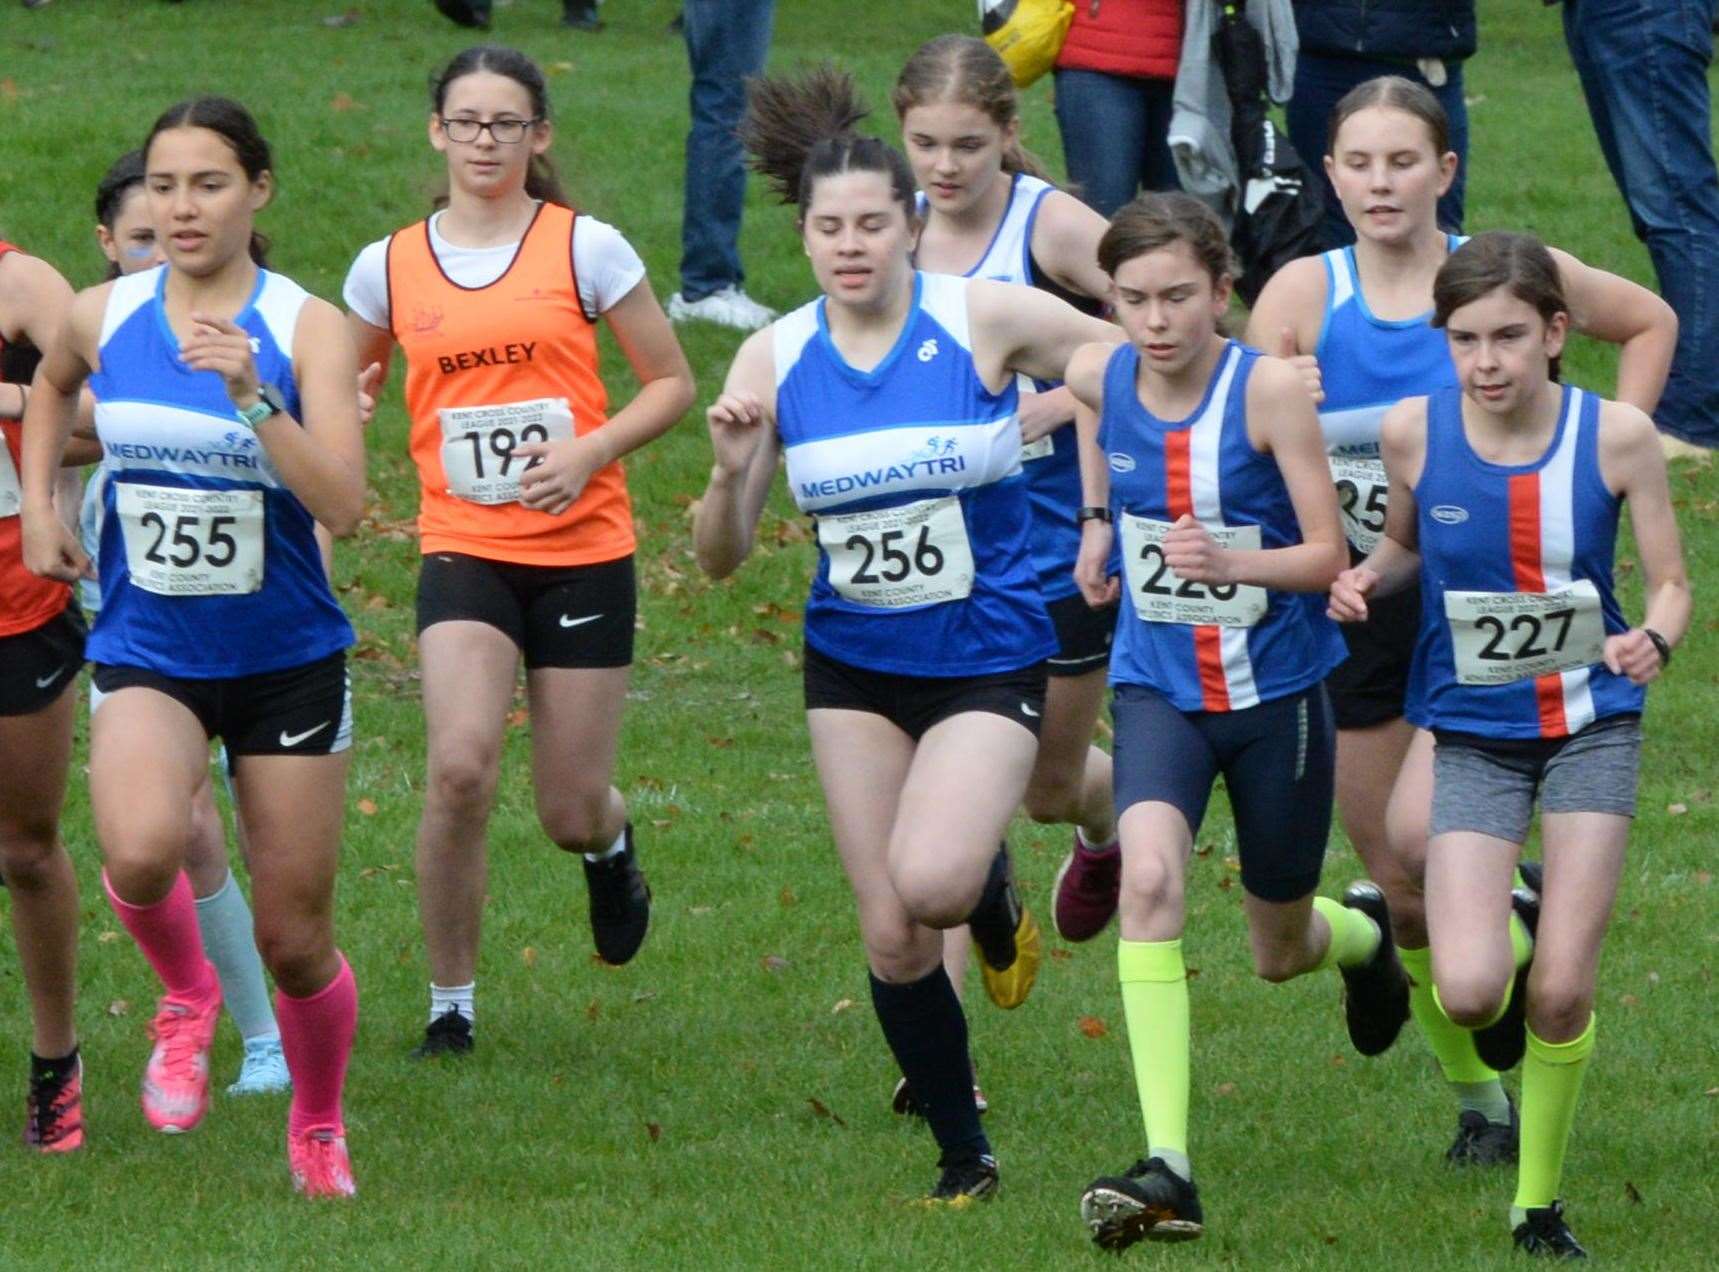 MedwayTri teammates No.255 Alice Stawowska and No.256 Lucy Stawowska run alongside No.227 Jennifer Clayton of Folkestone Running Club. Picture: Chris Davey (52347942)